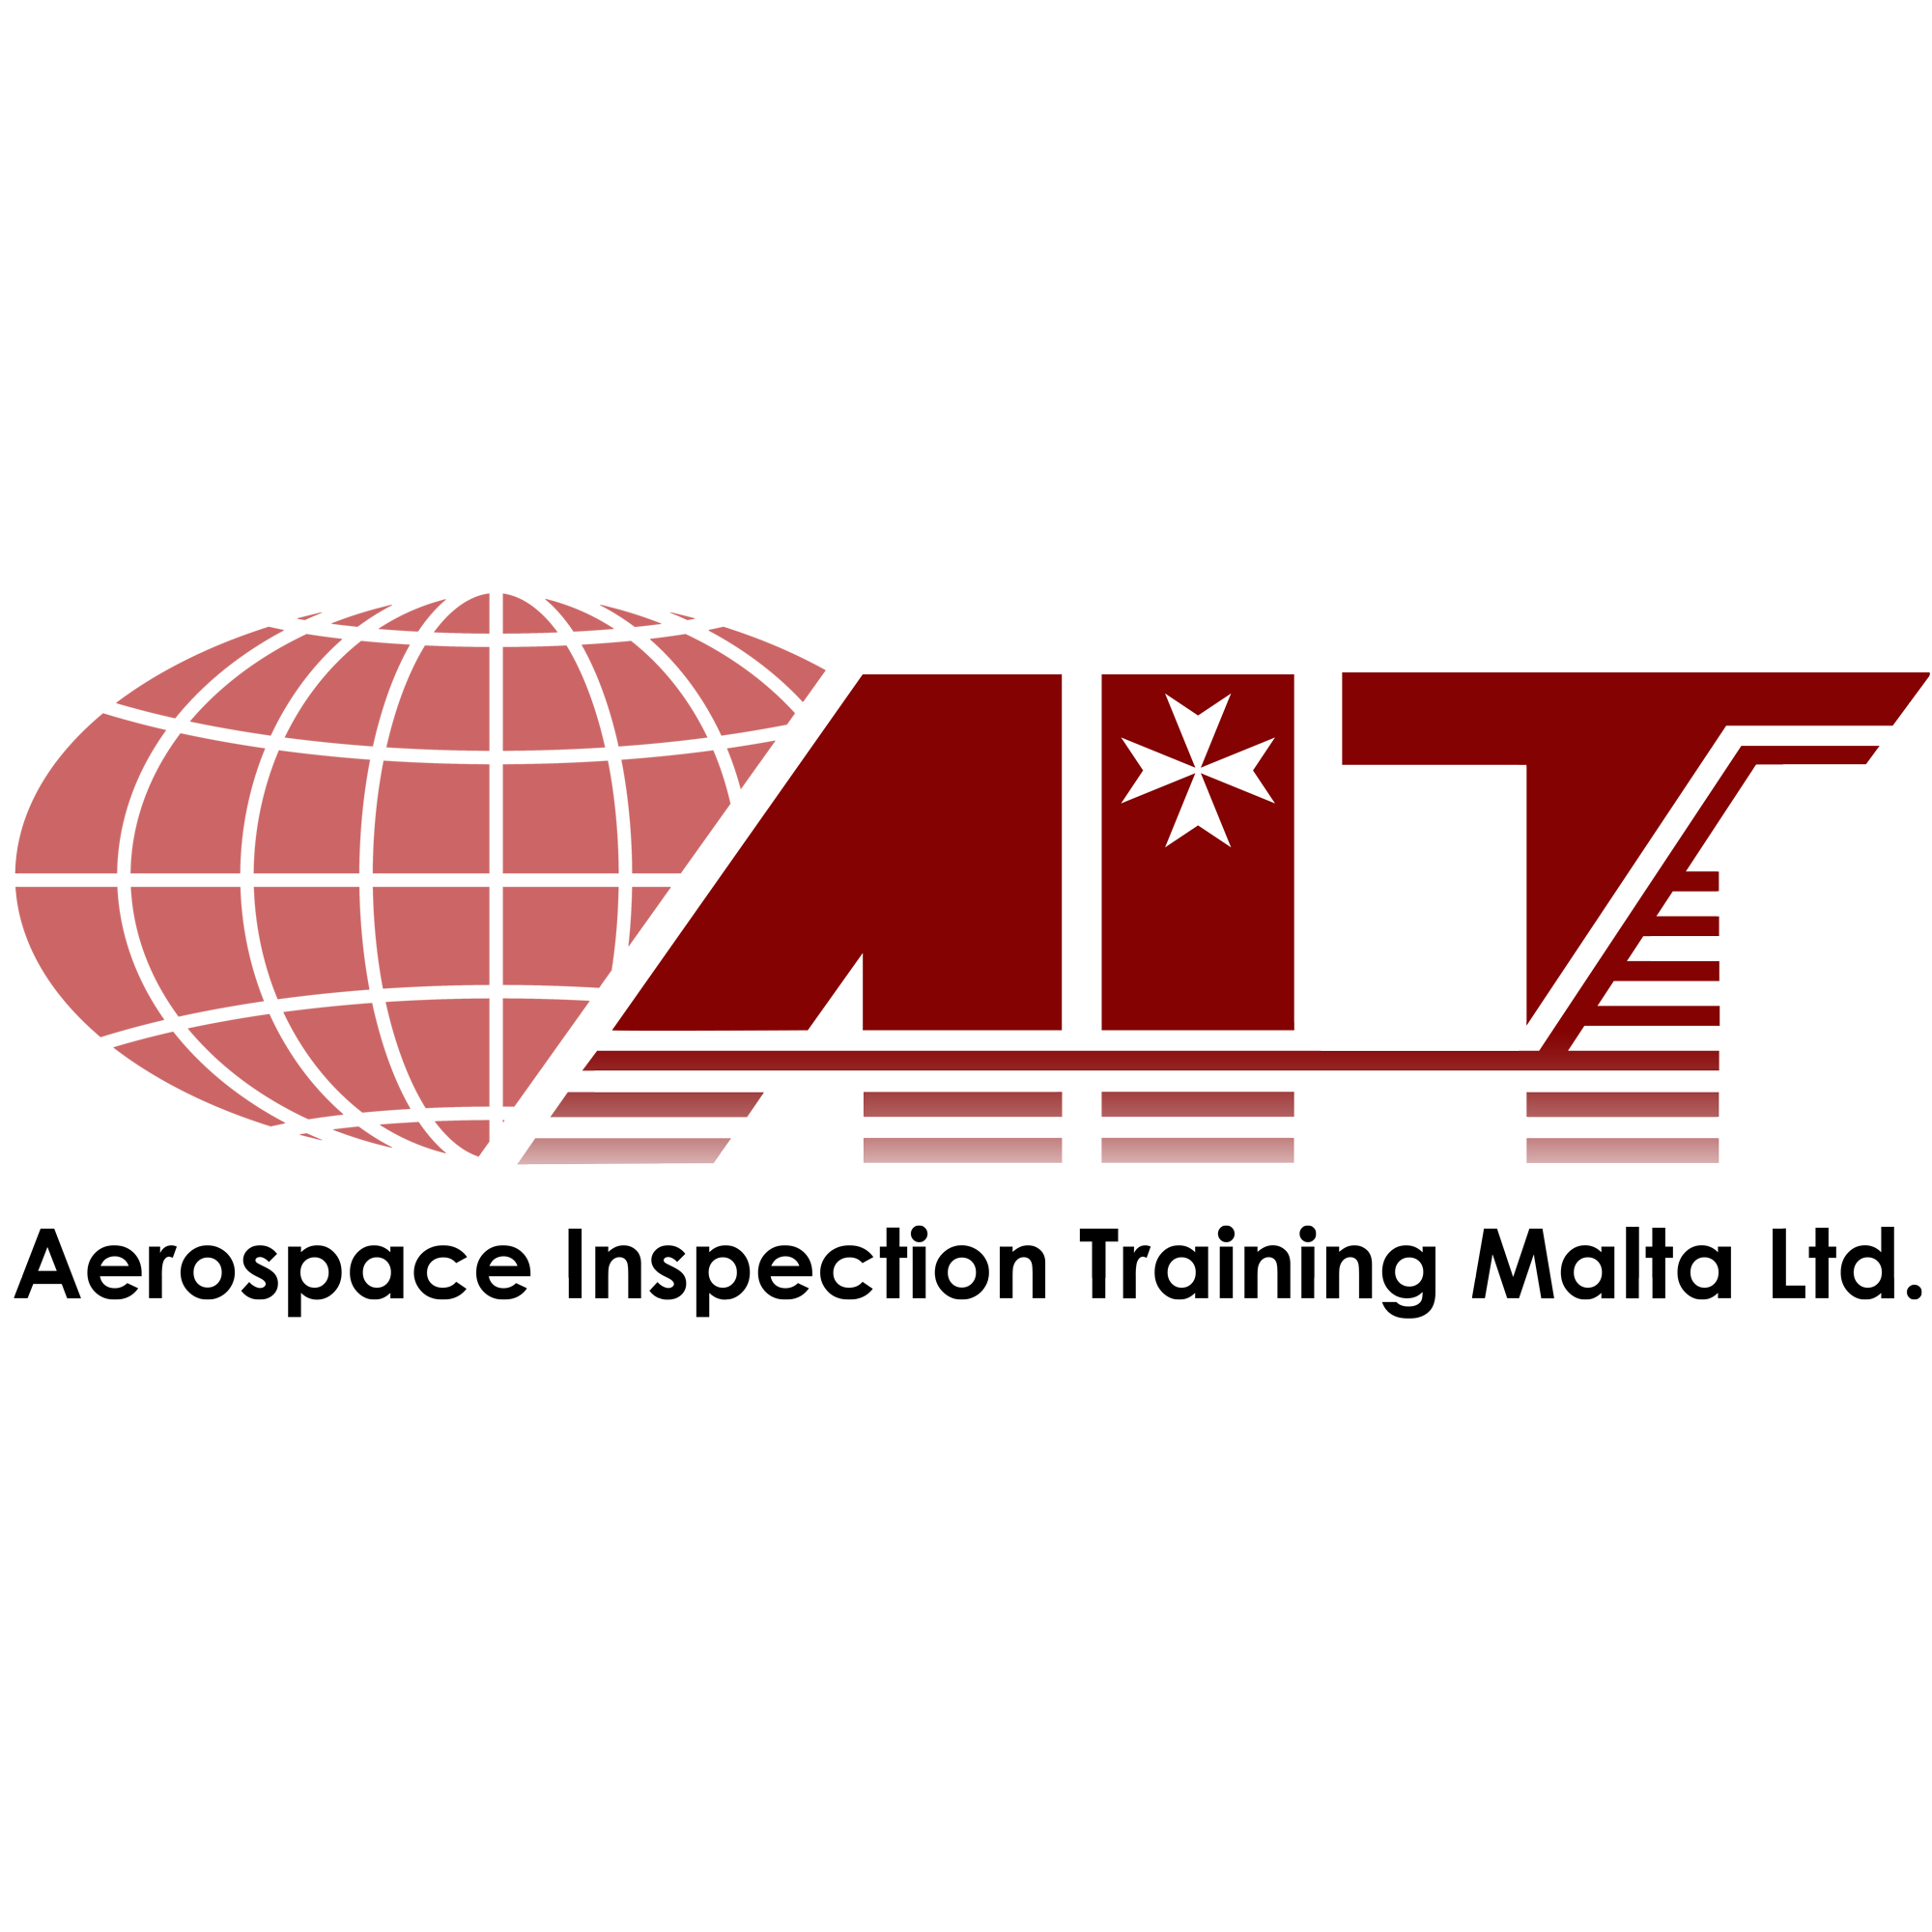 Aerospace Inspection Training Malta Ltd. profile on Qualified.One